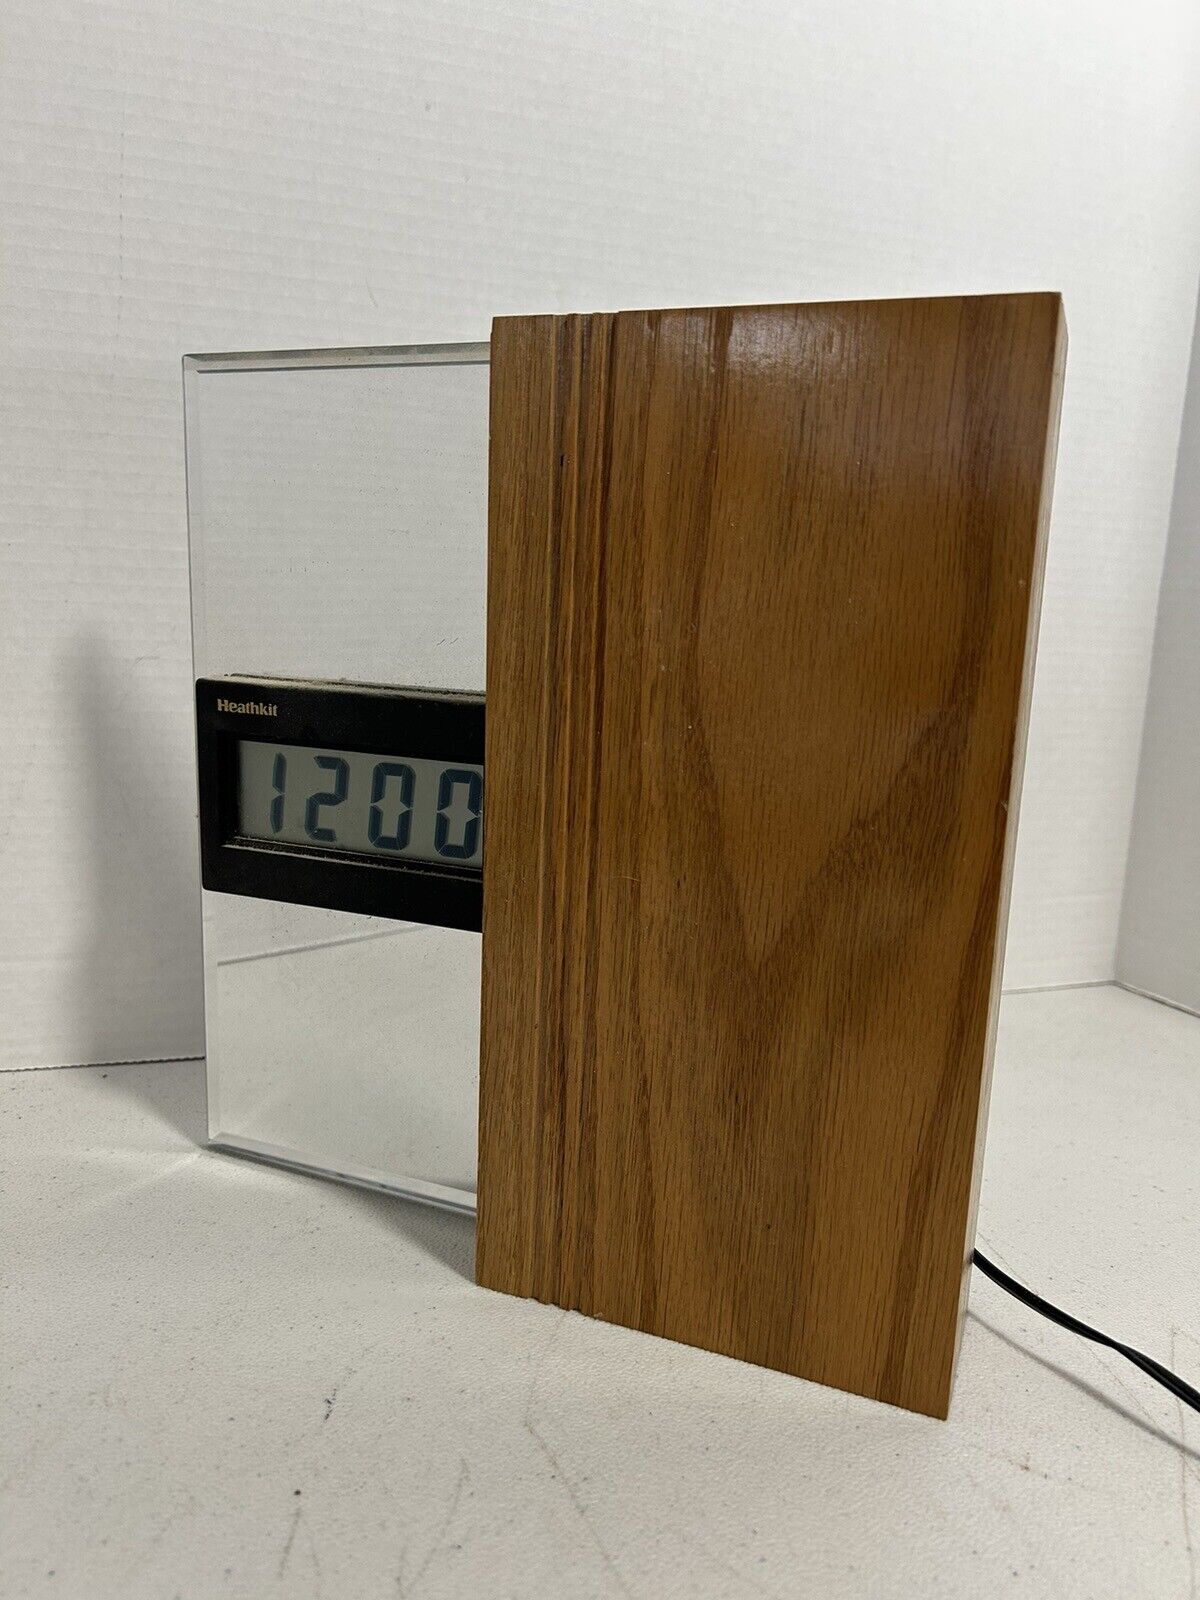 Vintage Heathkit GCW-1724 Digital Alarm Clock with Mirror